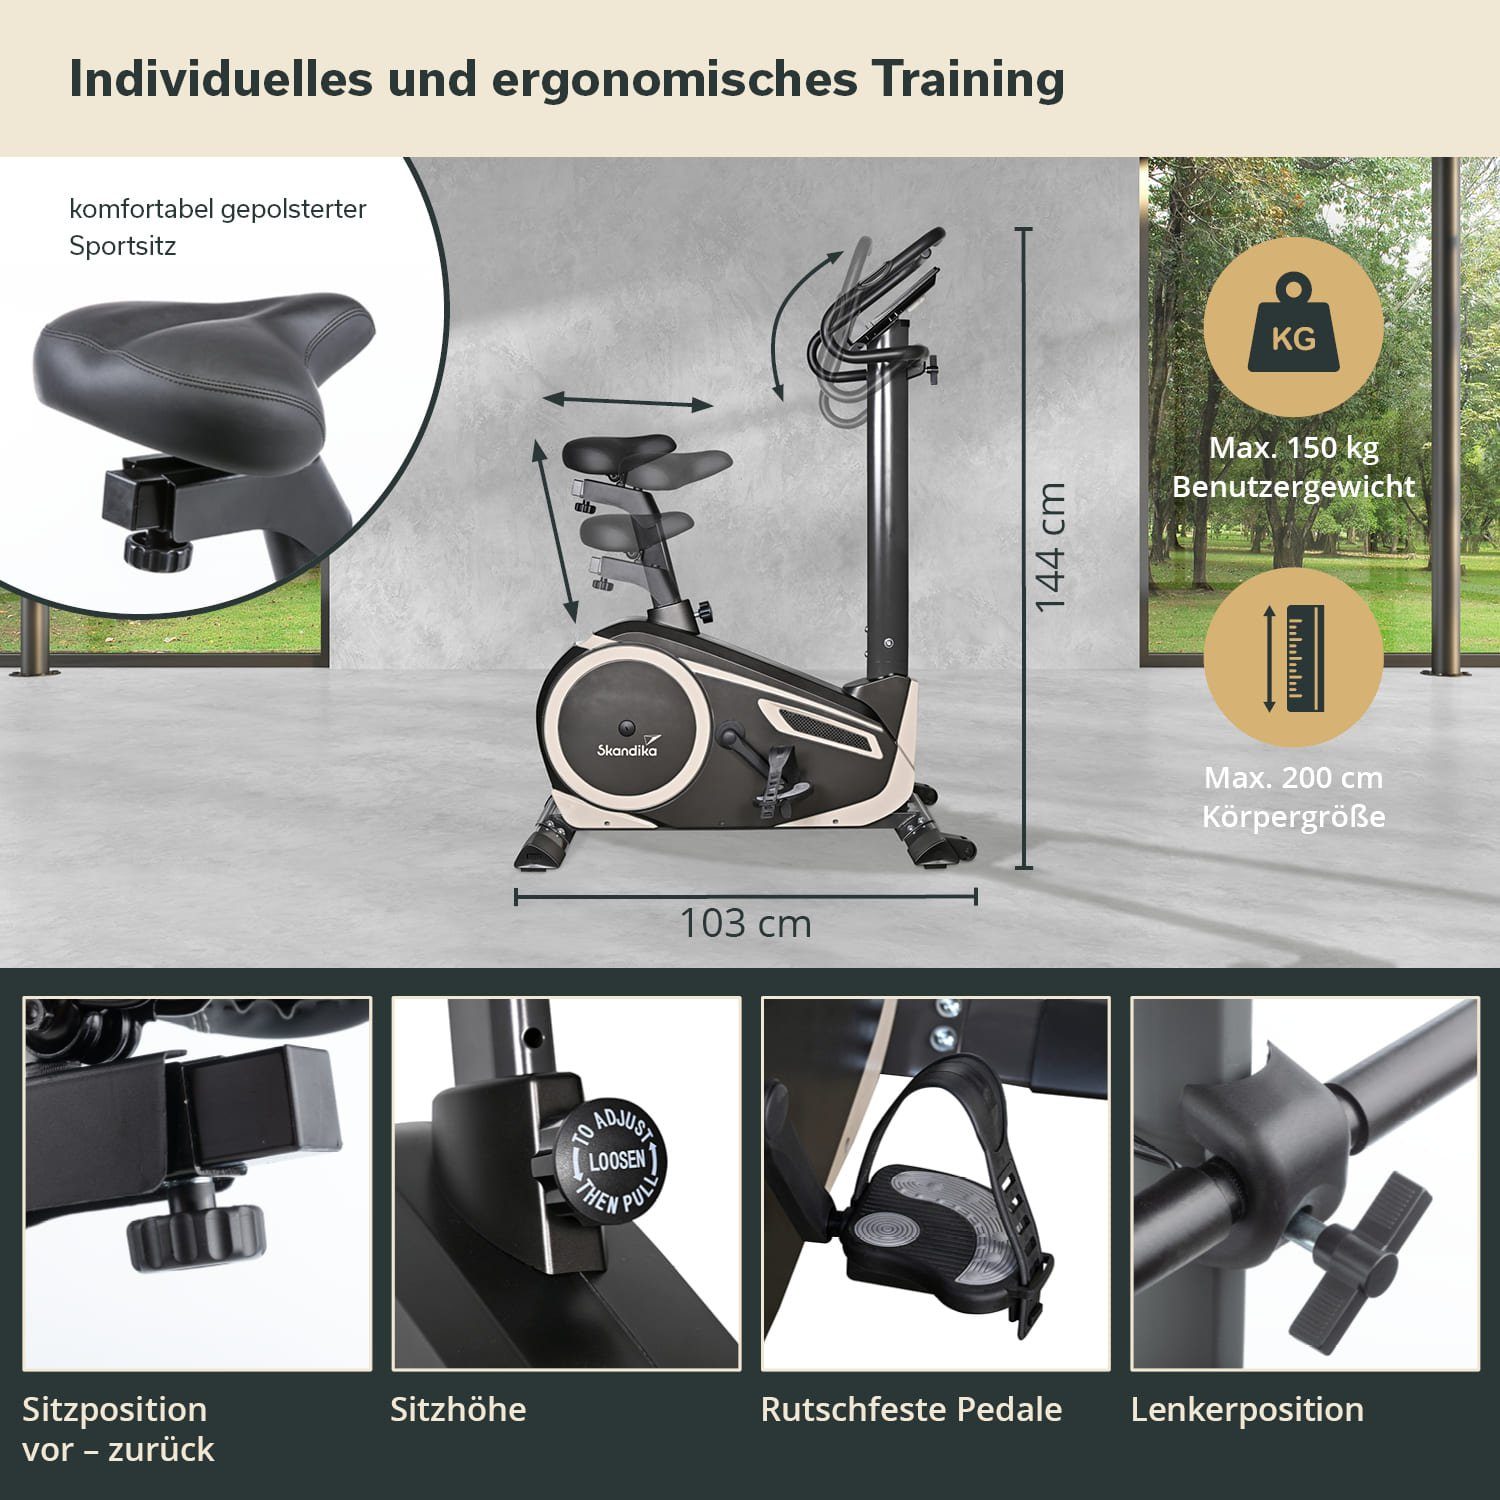 Ergometer Tablet Morpheus Hometrainer, Bluetooth), (mit für Fitnessbike, ergonomisch kompatibel Heimtrainer Skandika App Smartphone, oder Halterung Pulssensoren, Brustgurt,